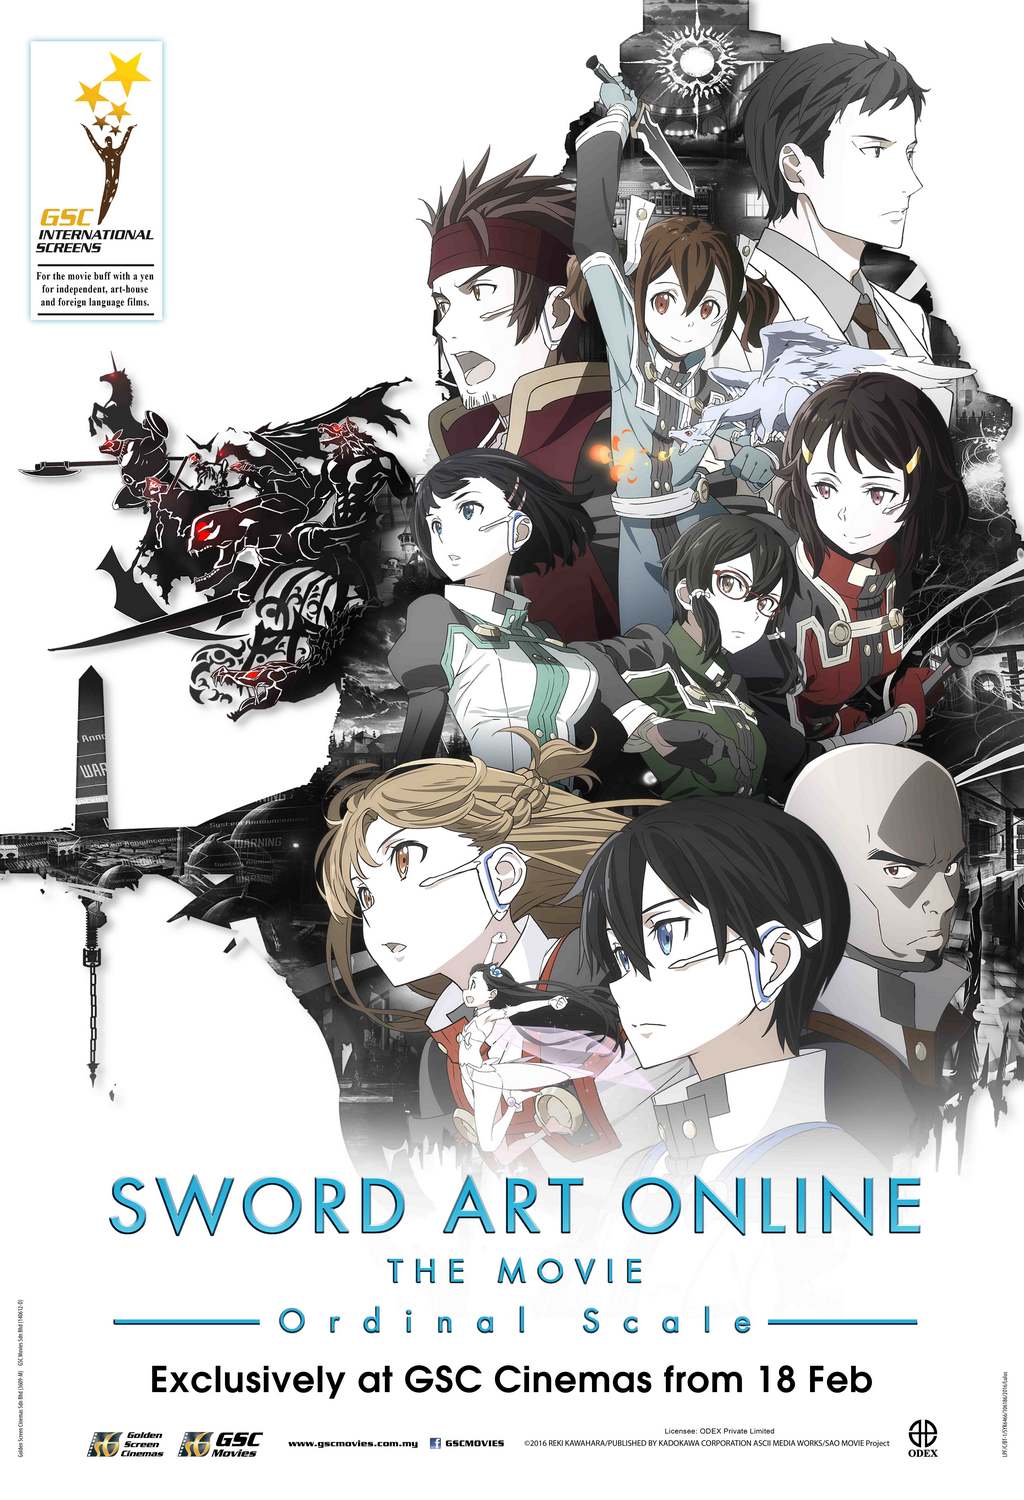 HD0744 - Sword Art Online 2017 - Ranh giới hư ảo